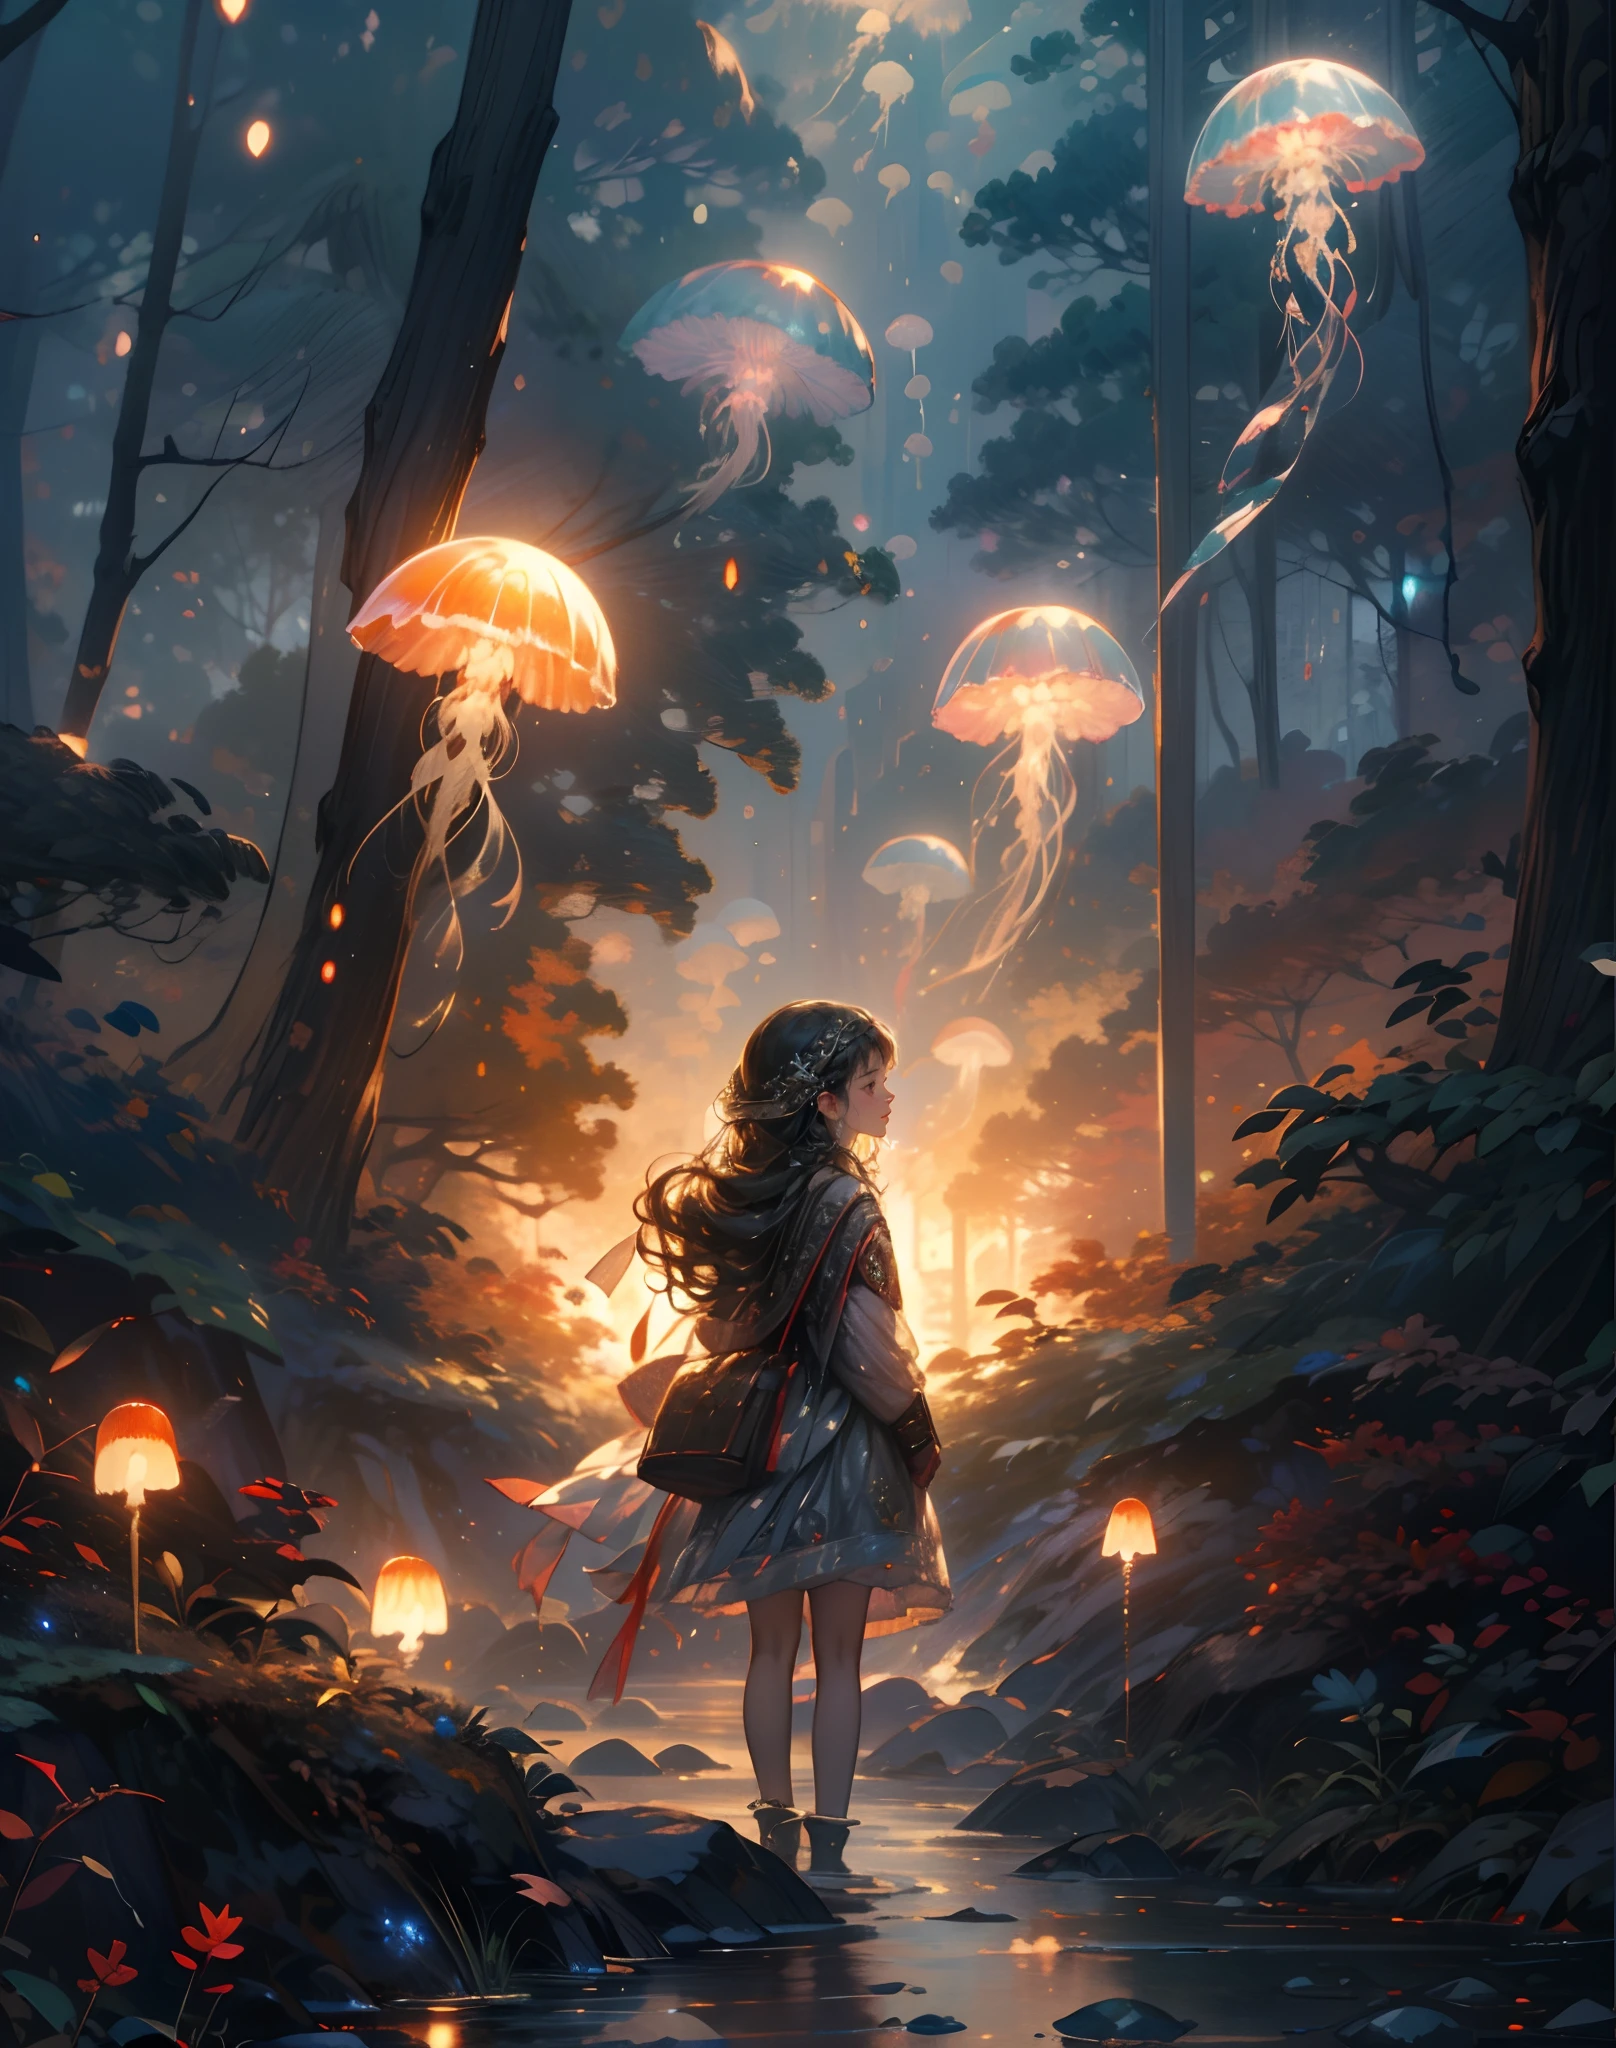 jellyfish森, 1人の女の子, キノコ, ドレス, 長い髪, 景色, white ドレス, 一人で, 自然, 水, 水遊び, 屋外, 木, 立っている, 黒髪, ファンタジー, 森